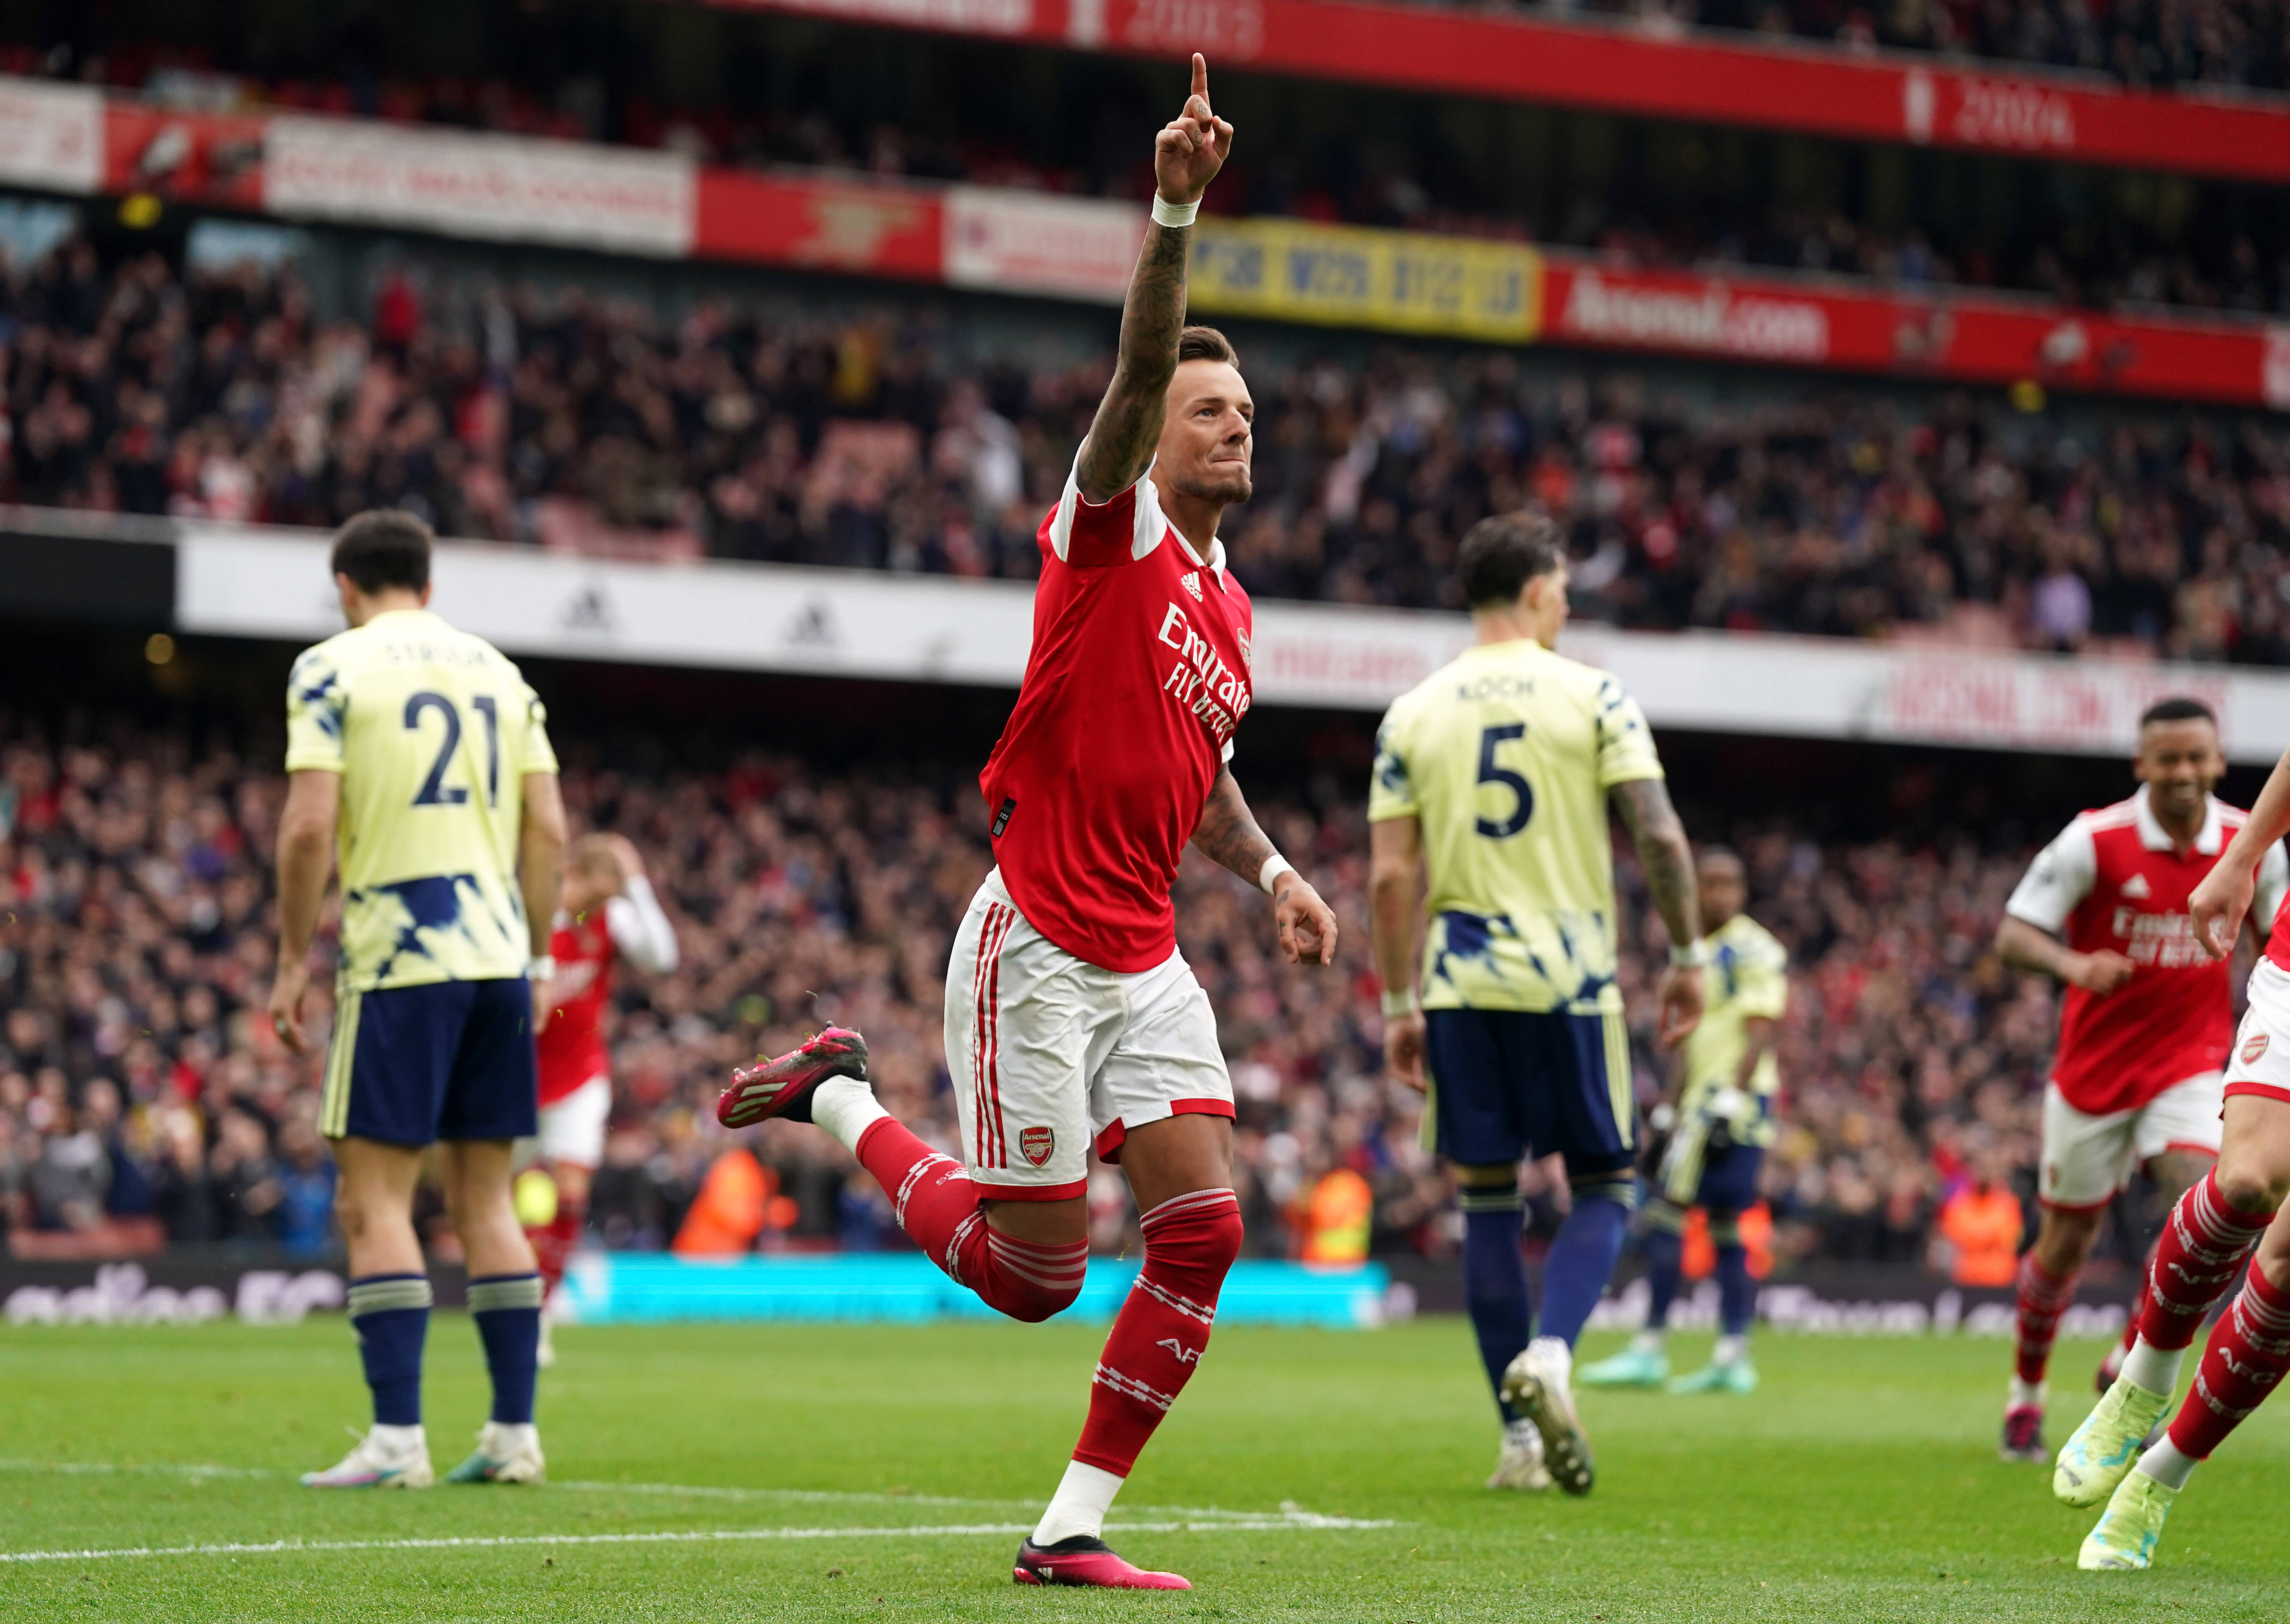 Highlights Arsenal 4-1 Leeds - Gabriel Jesus scores 2 goals